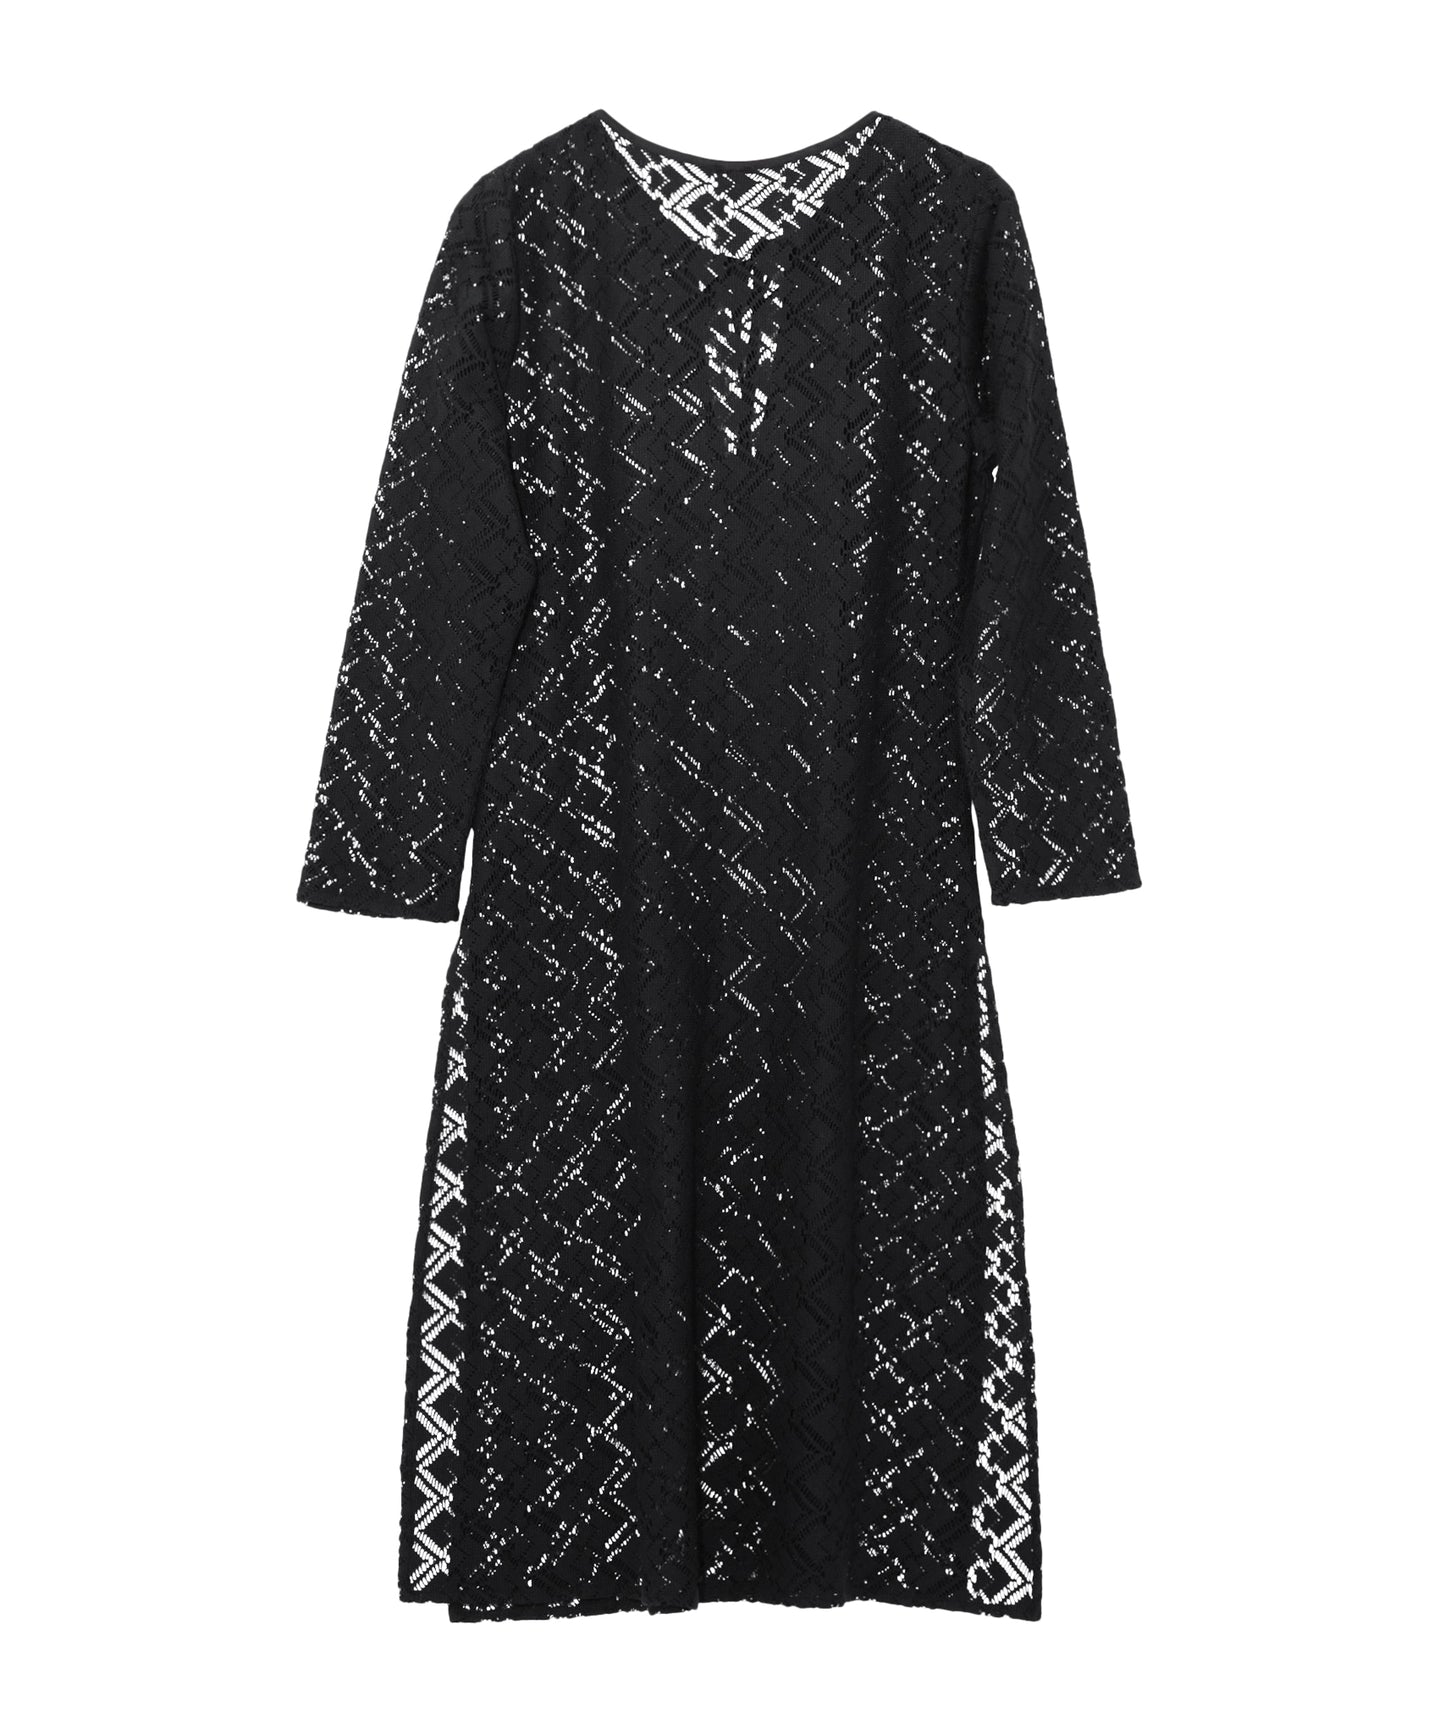 Astrid Longline Lace Dress in color black